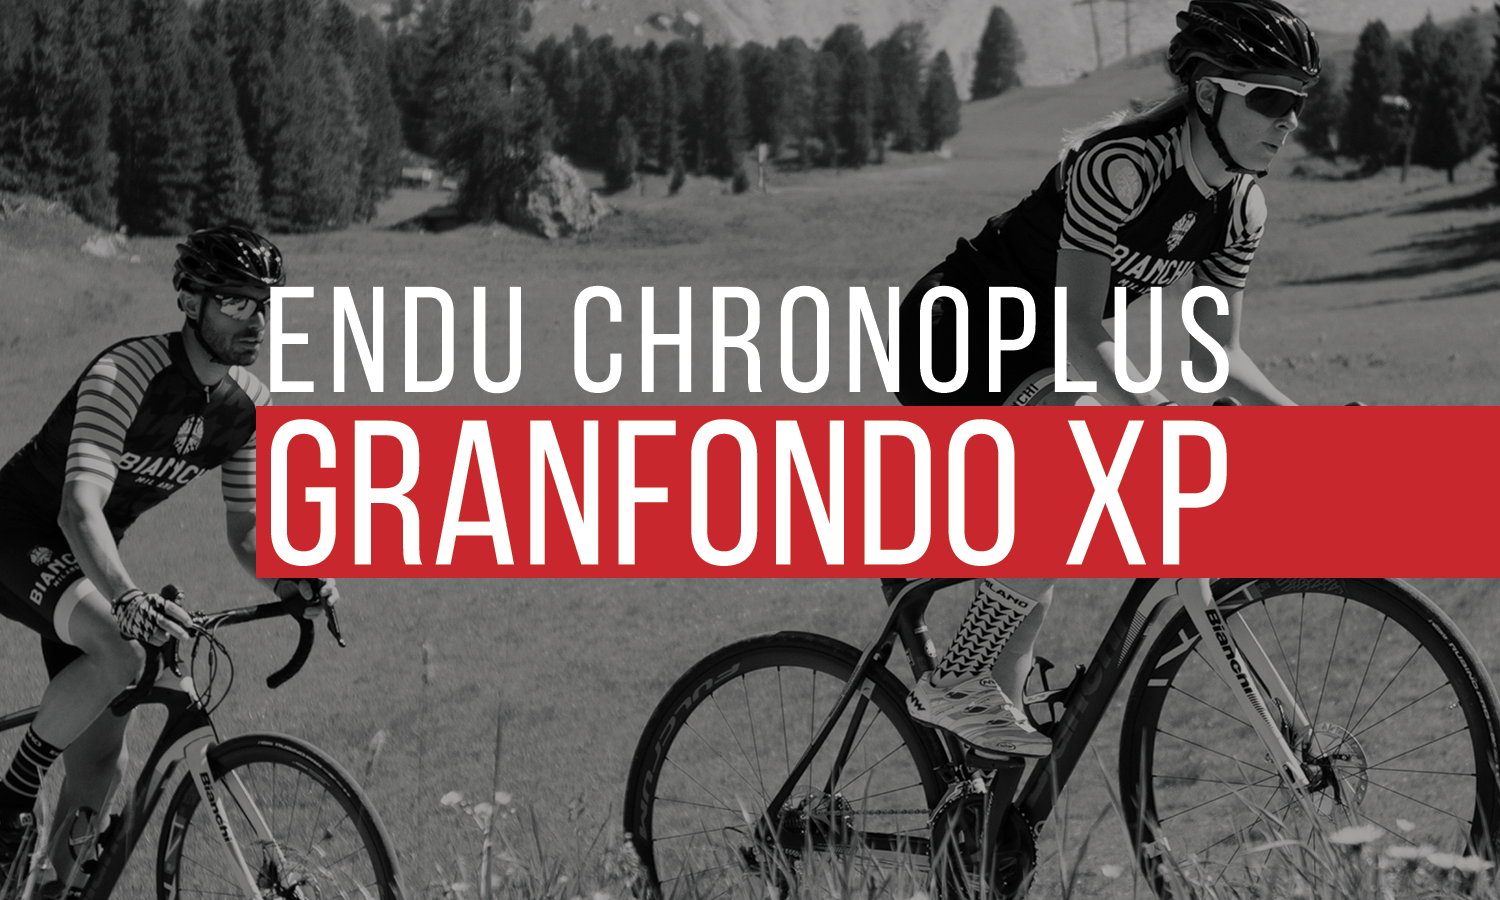 ENDU ChronoPlus Granfondo experience